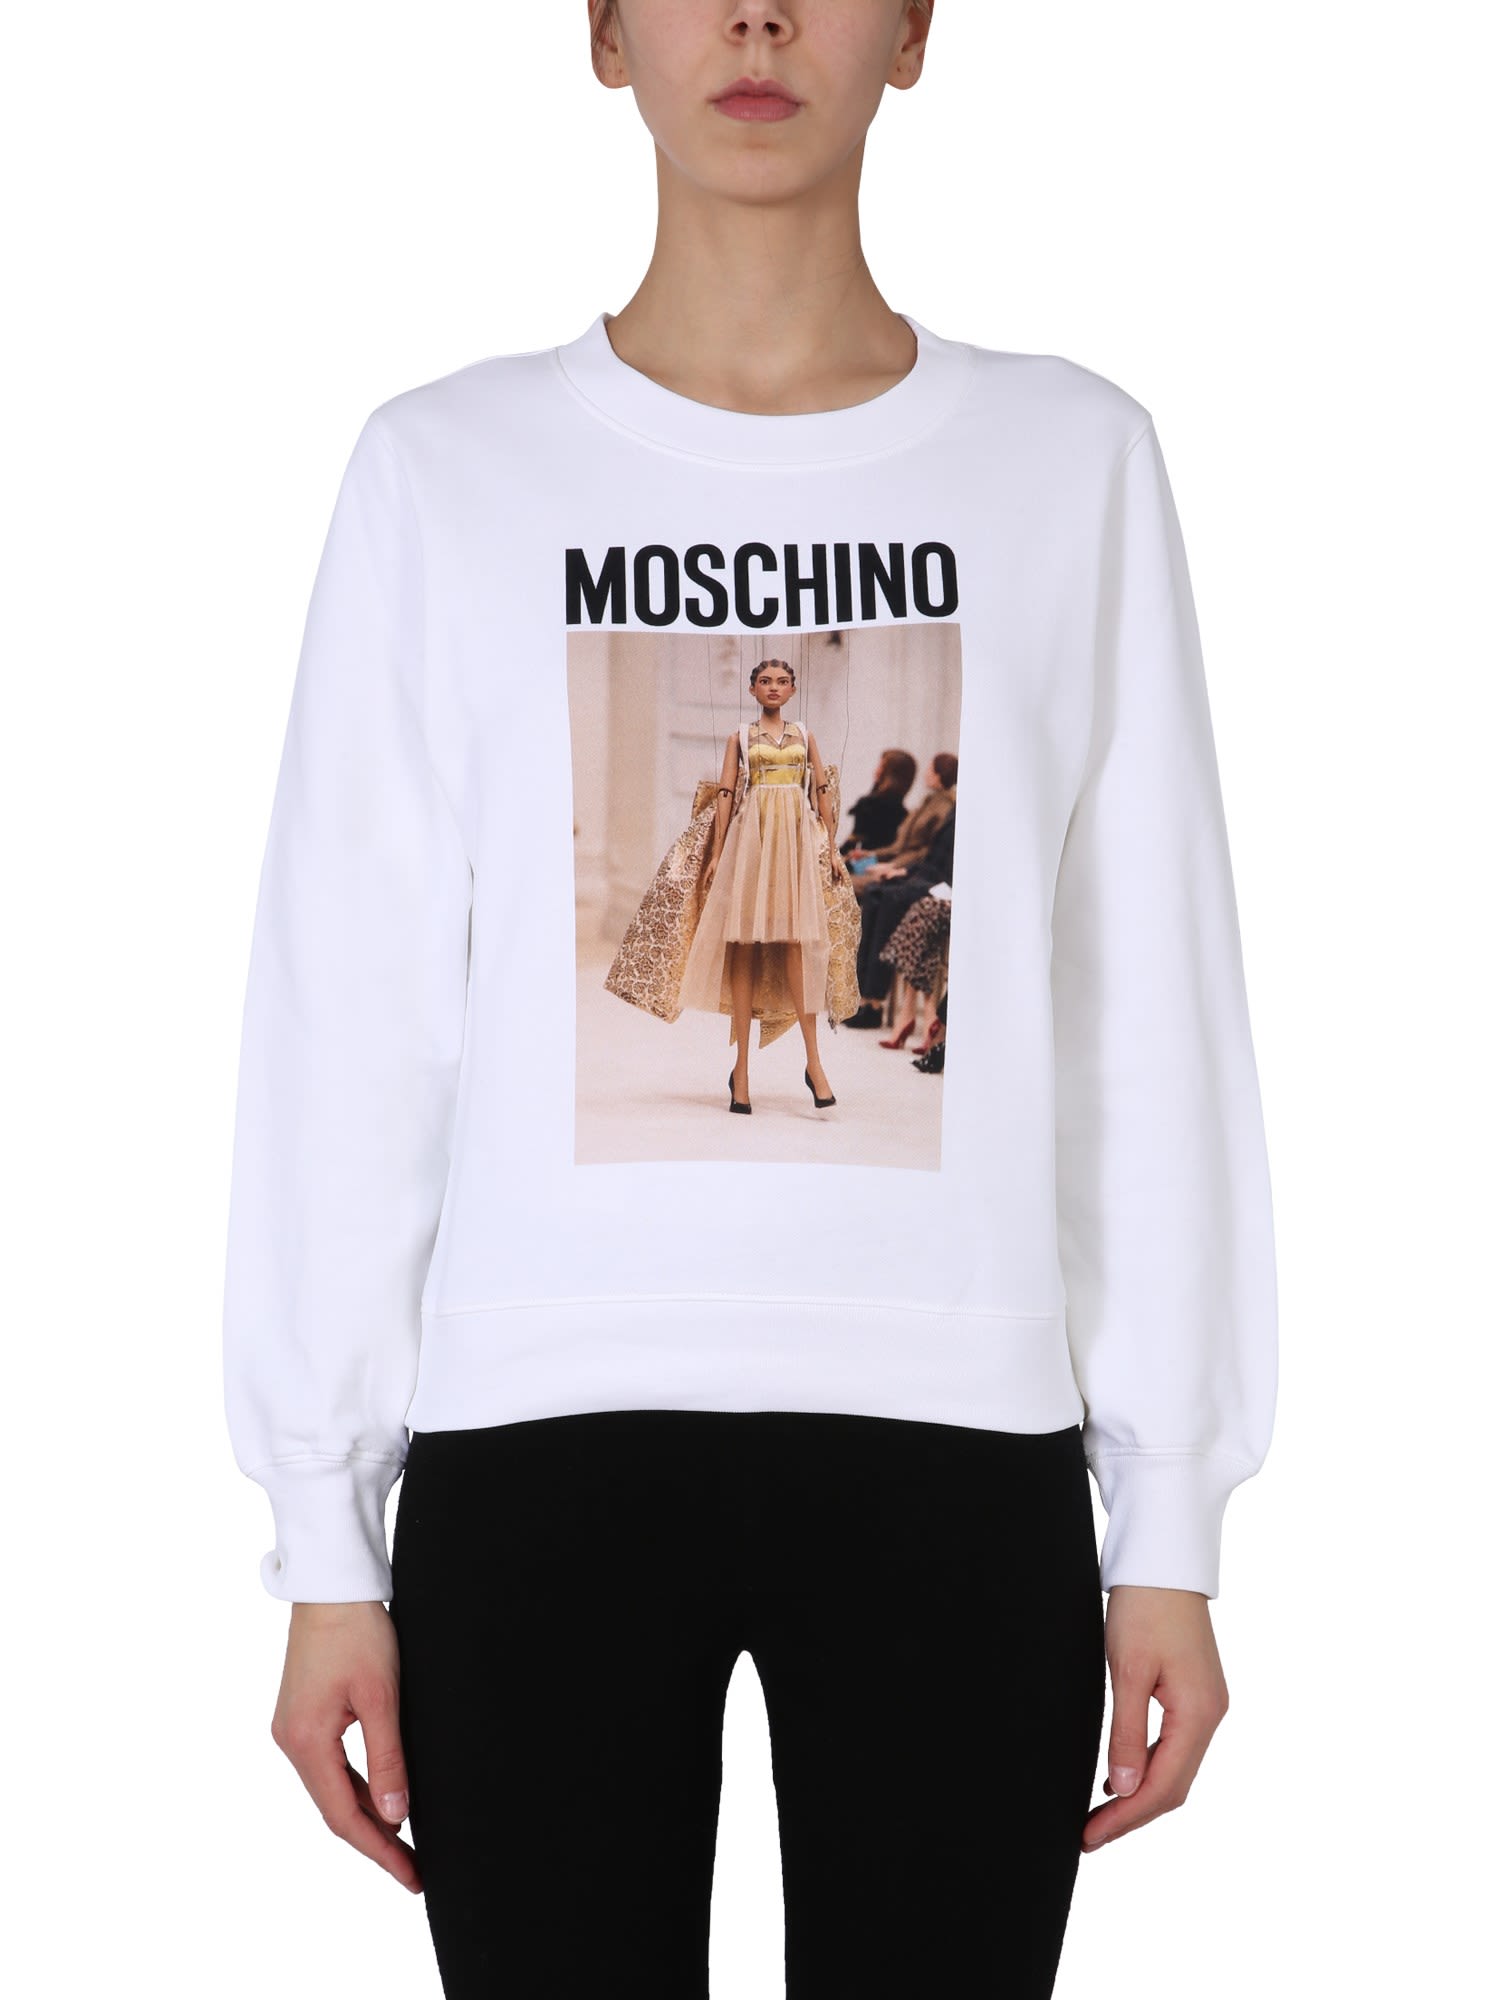 Moschino No Strings Attached Sweatshirt